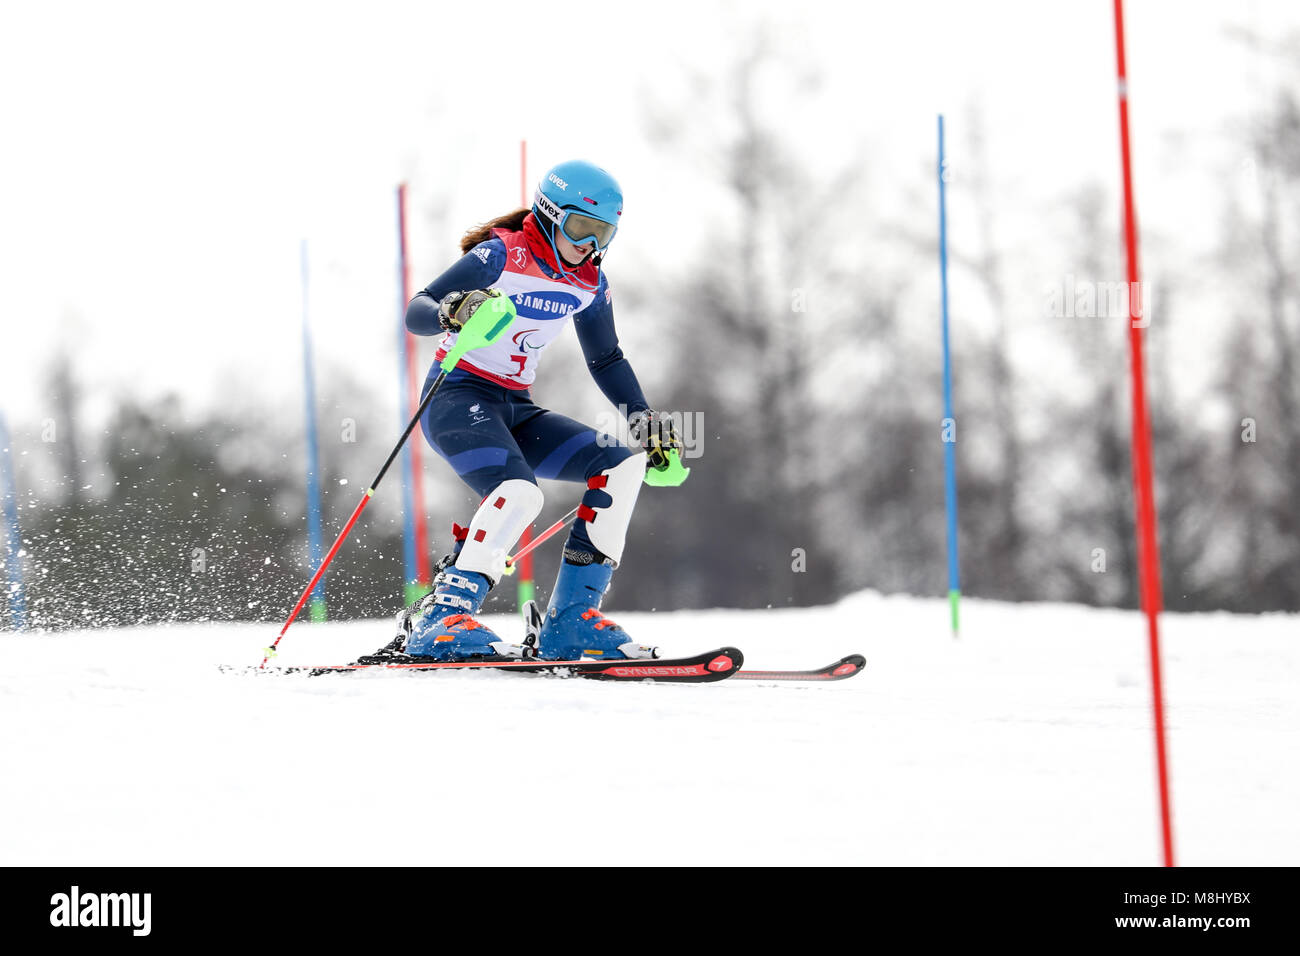 PyeongChang 18. März. Slalom der Frauen. Mannschaft GB-FITZPATRICK Menna, Guide: KEHOE Jennifer Credit: Marco Ciccolella/Alamy leben Nachrichten Stockfoto